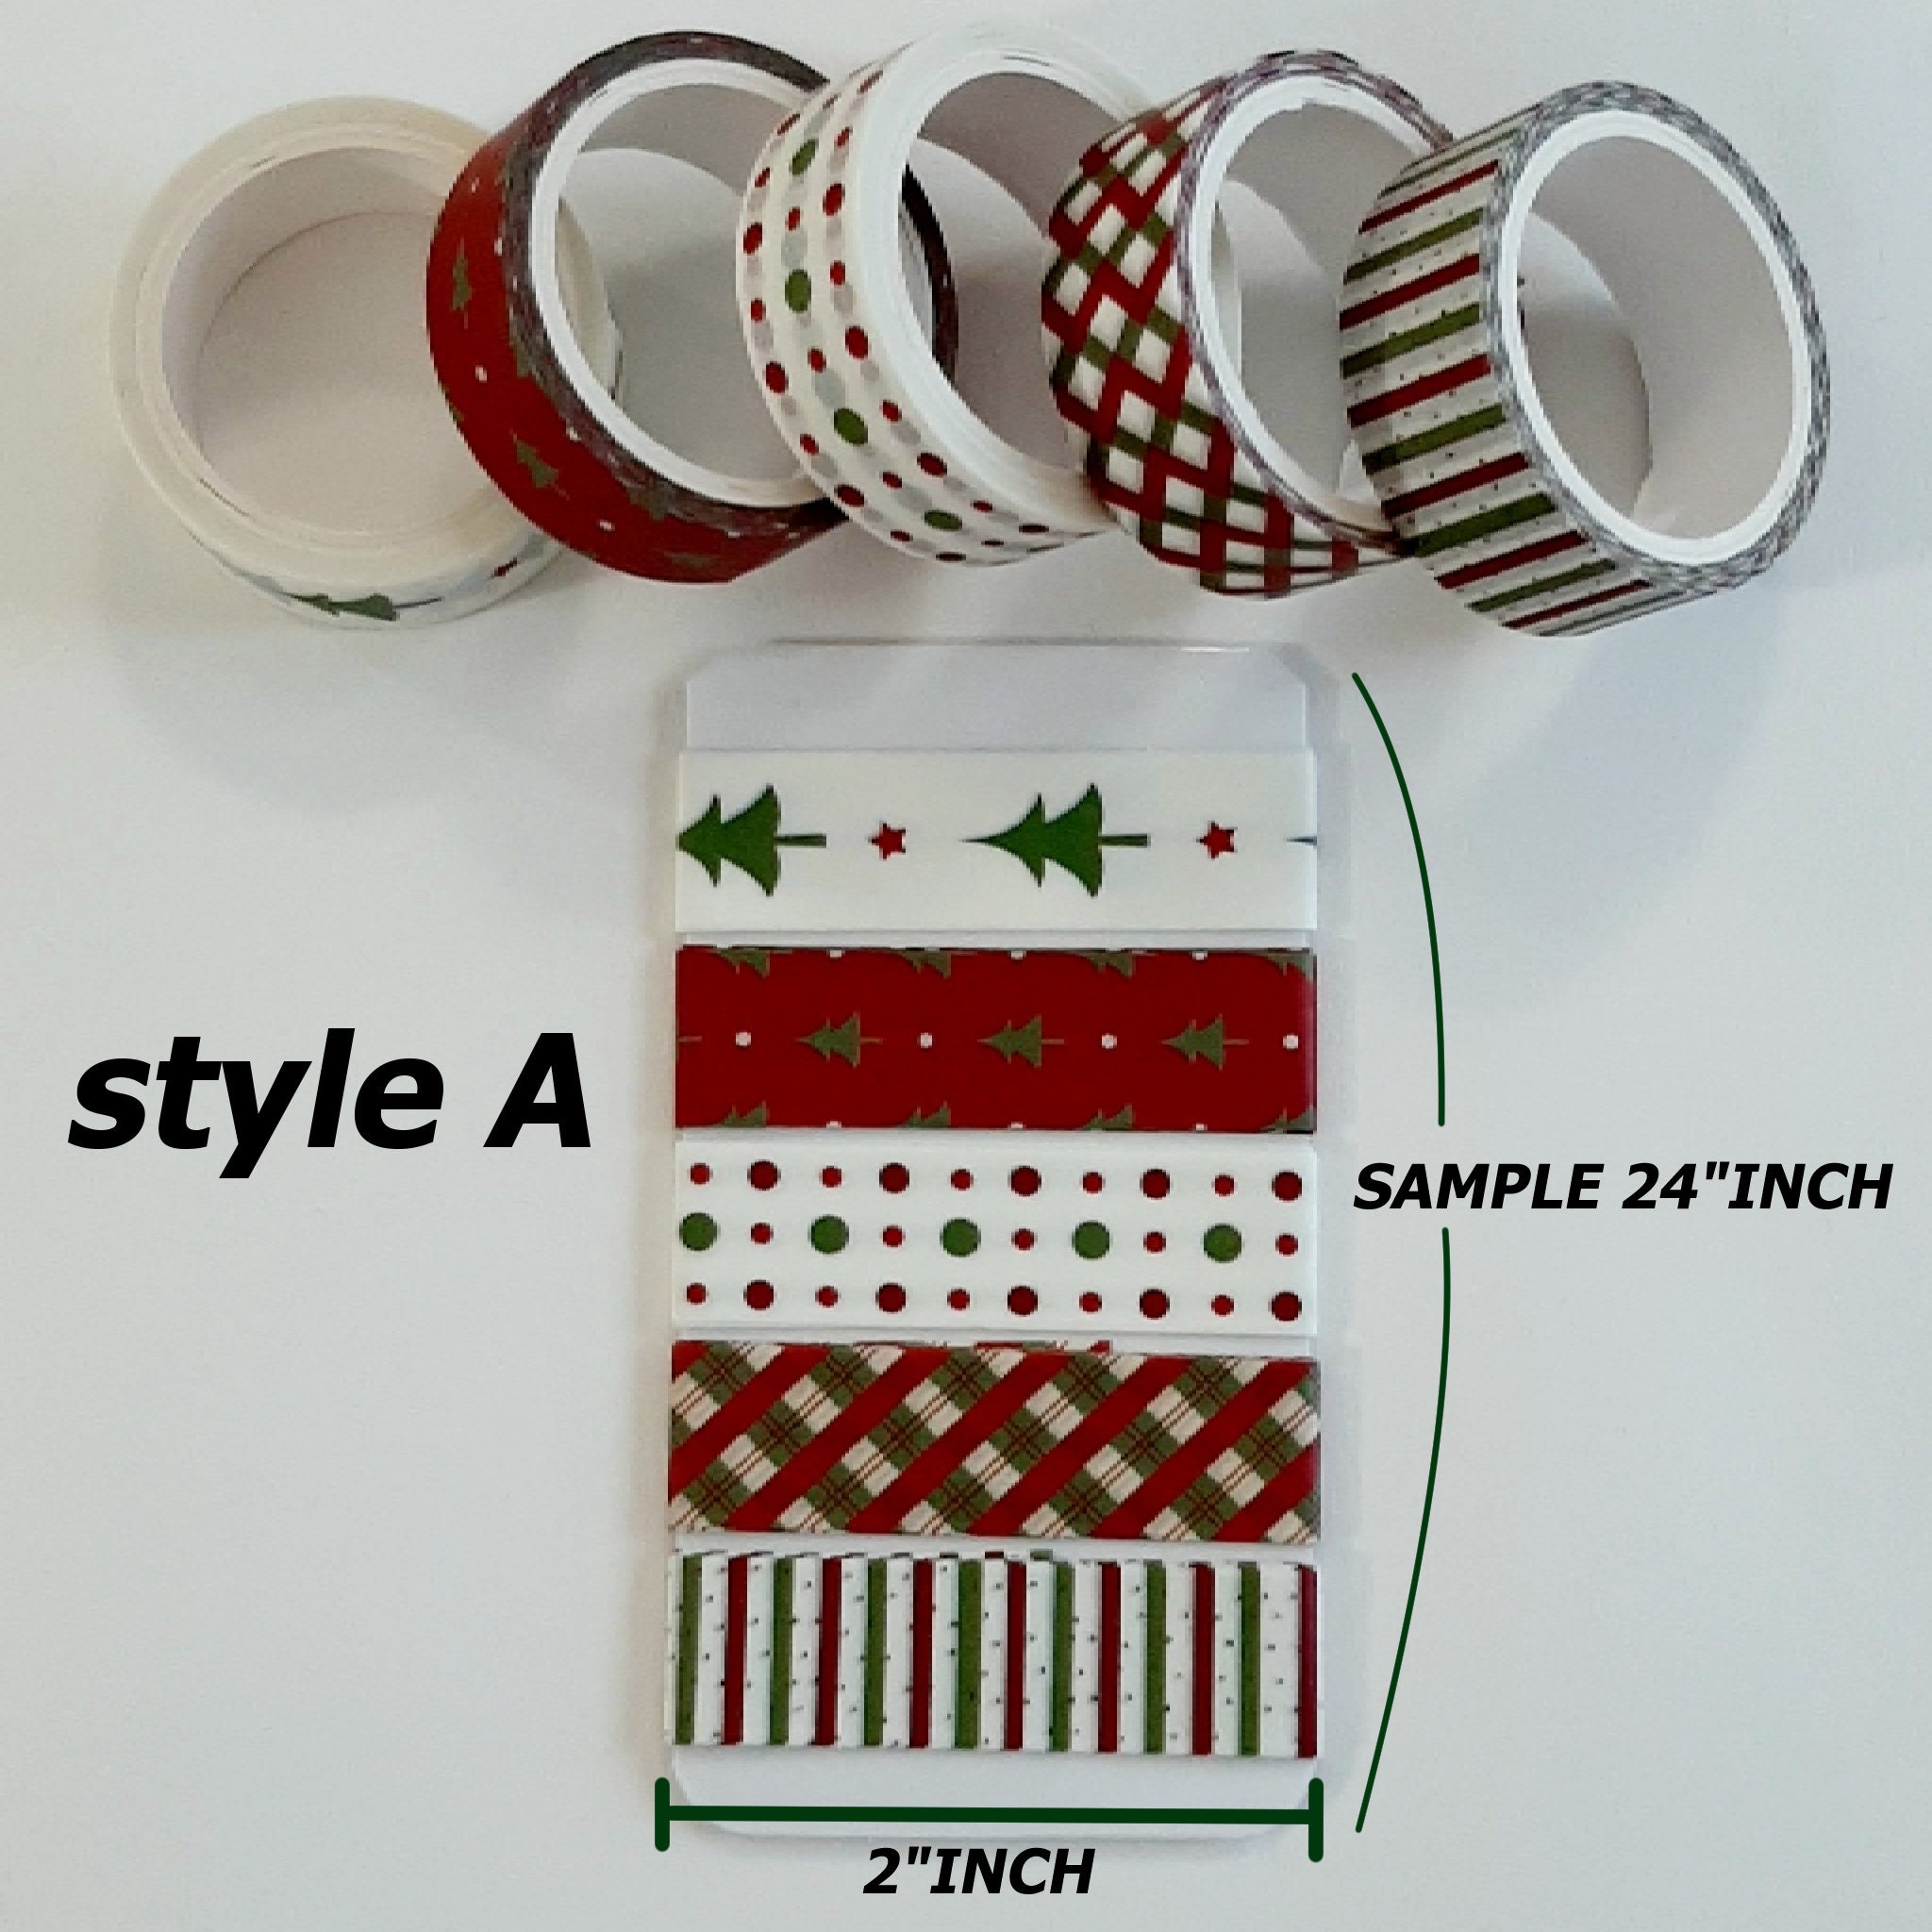 Merry Christmas Washi Tapes, Christmas Decorative Tape – MyKawaiiCrate